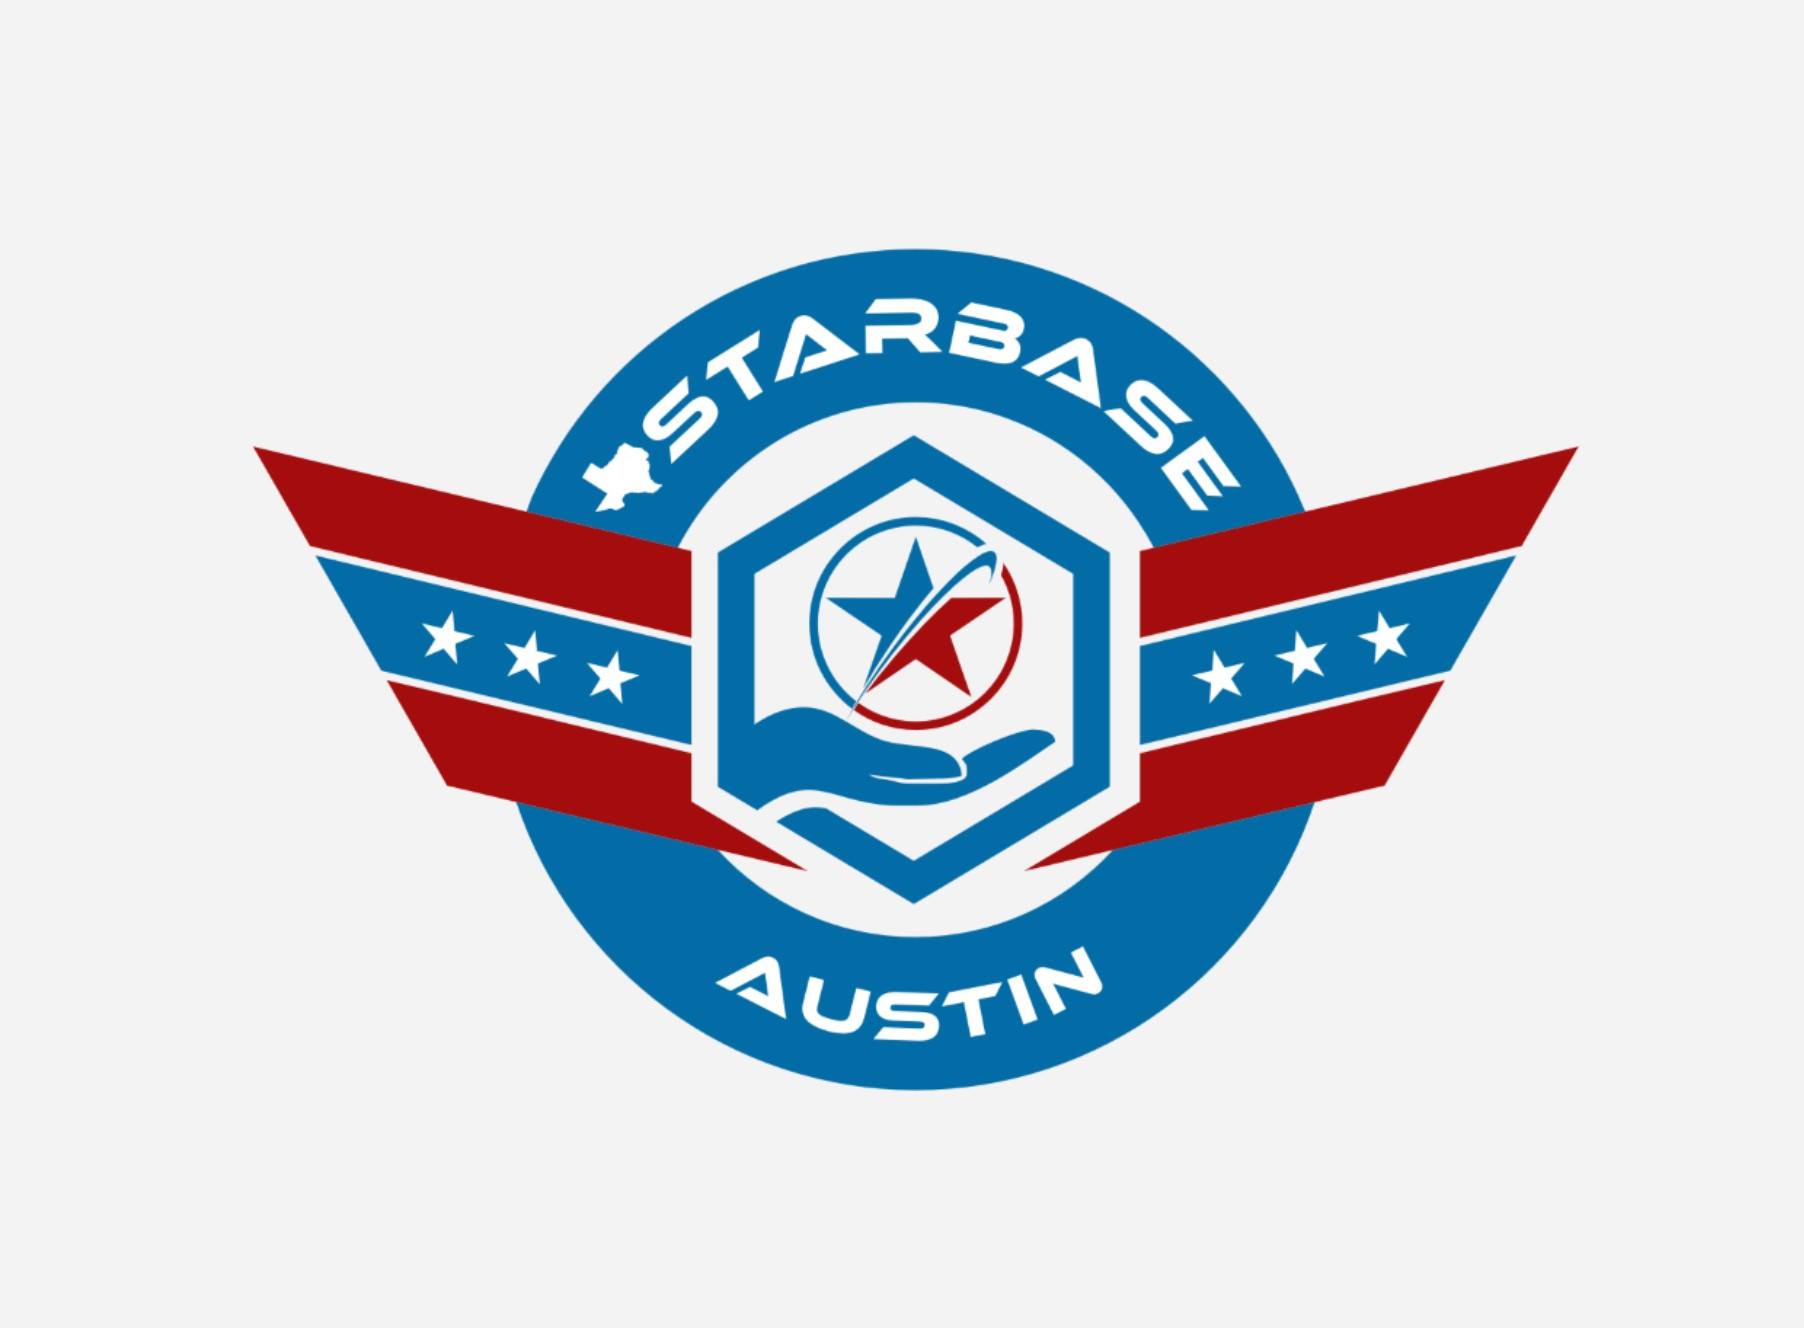 STARBASE Austin